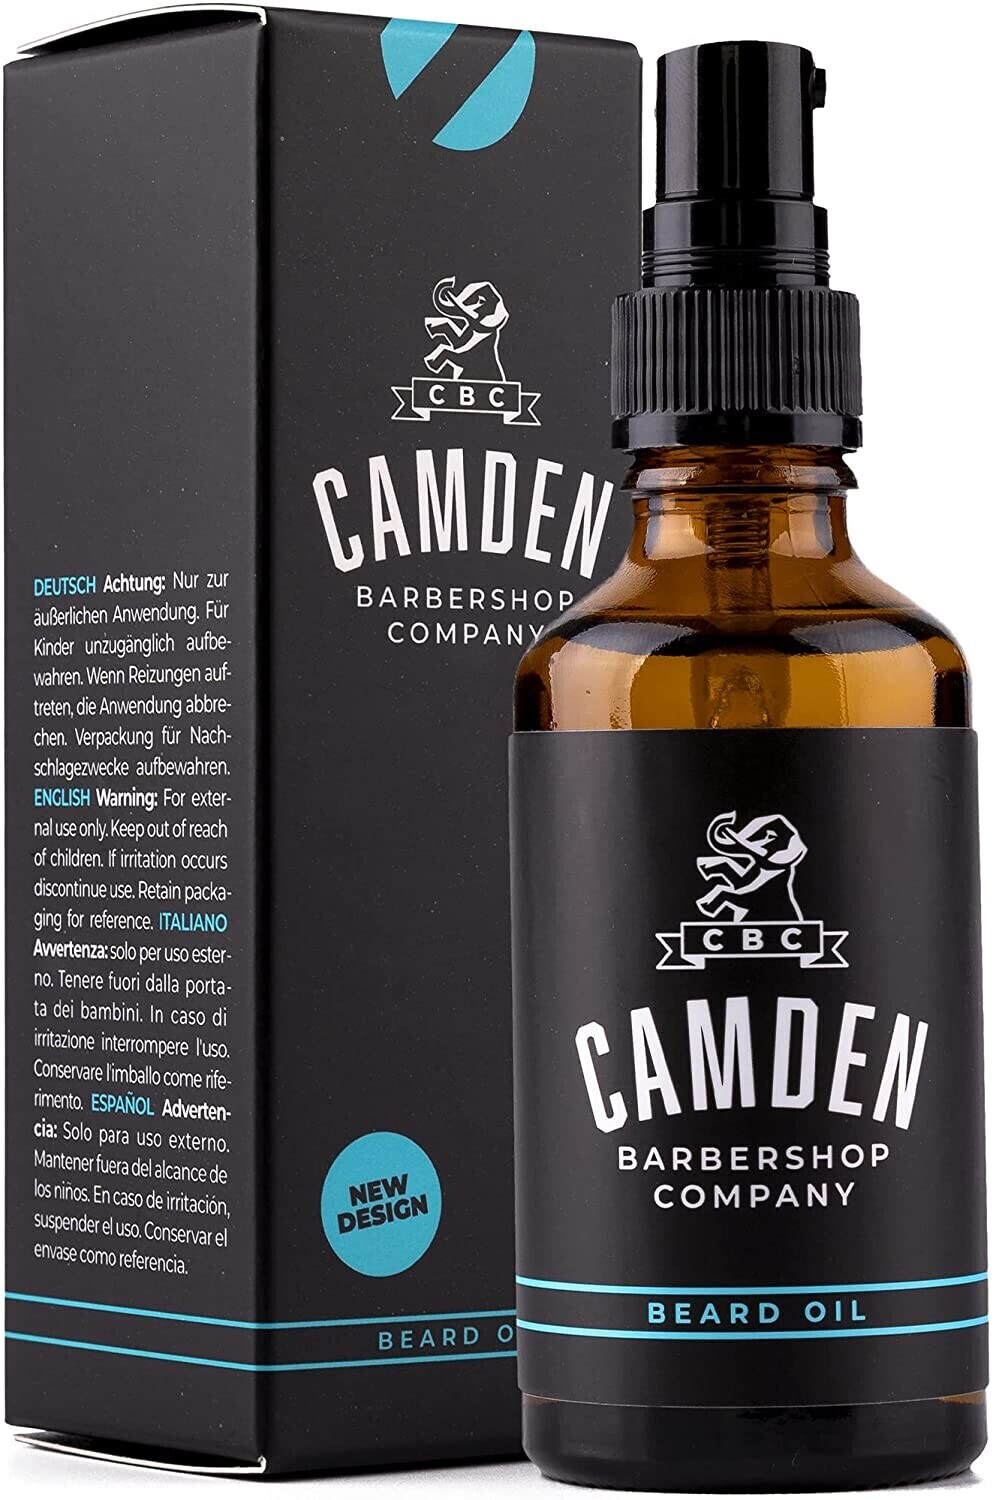 Camden Barbershop Company Original Beard Oil 9,99 ab (50ml) € bei Preisvergleich 